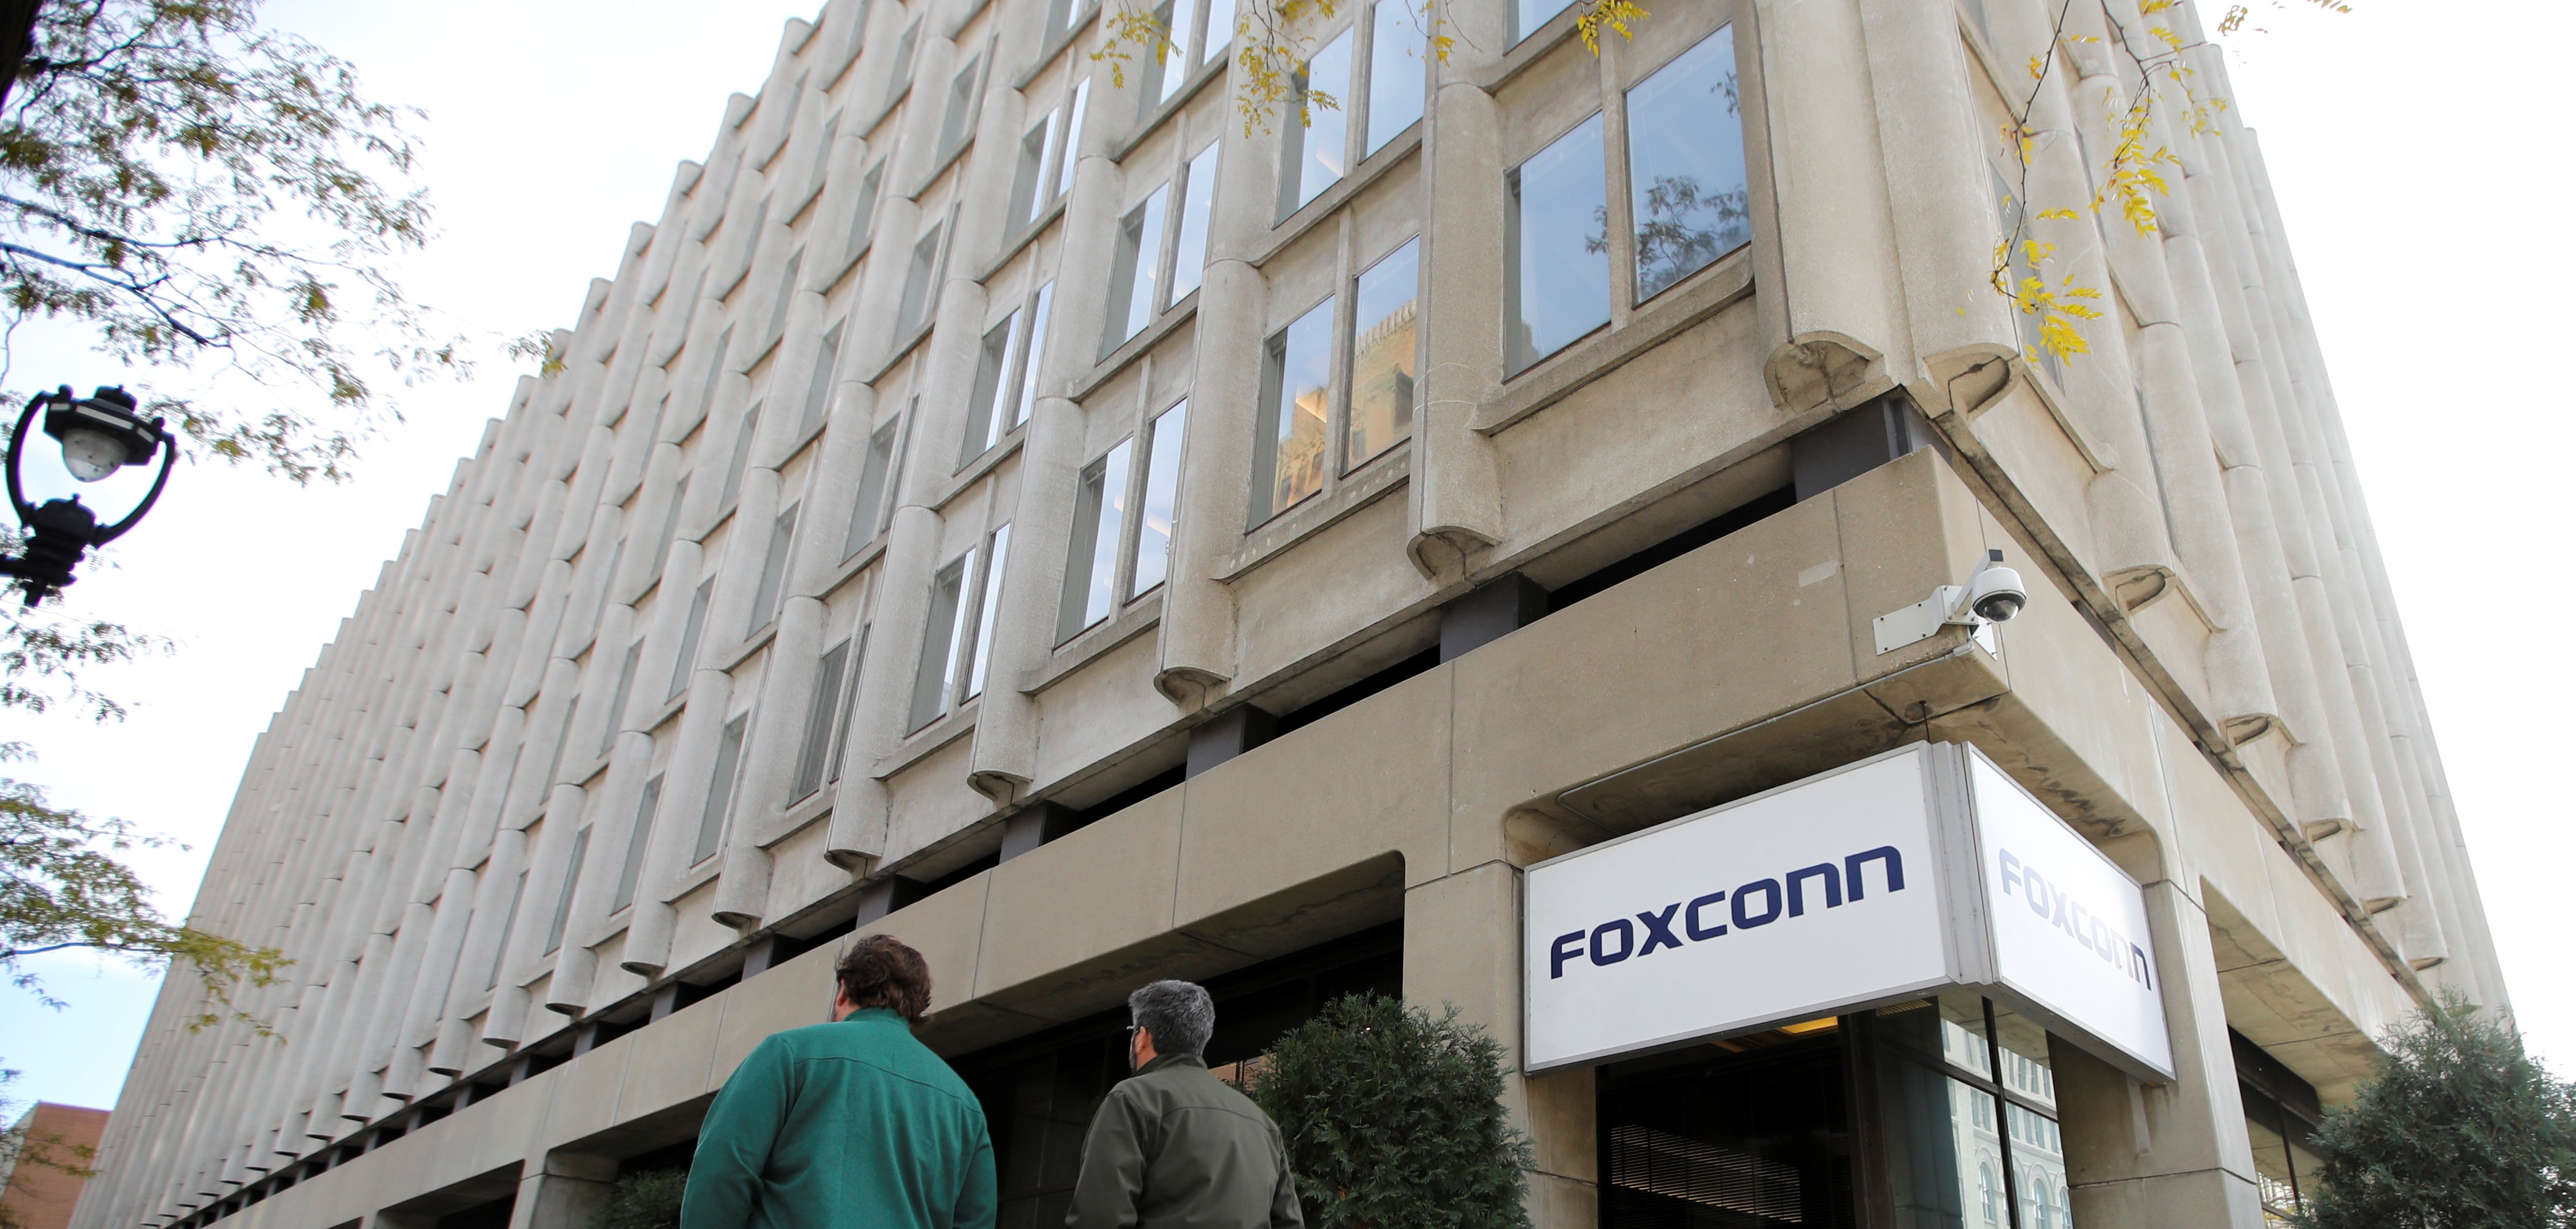 Apple supplier Foxconn to invest $300 mln more in northern Vietnam - media